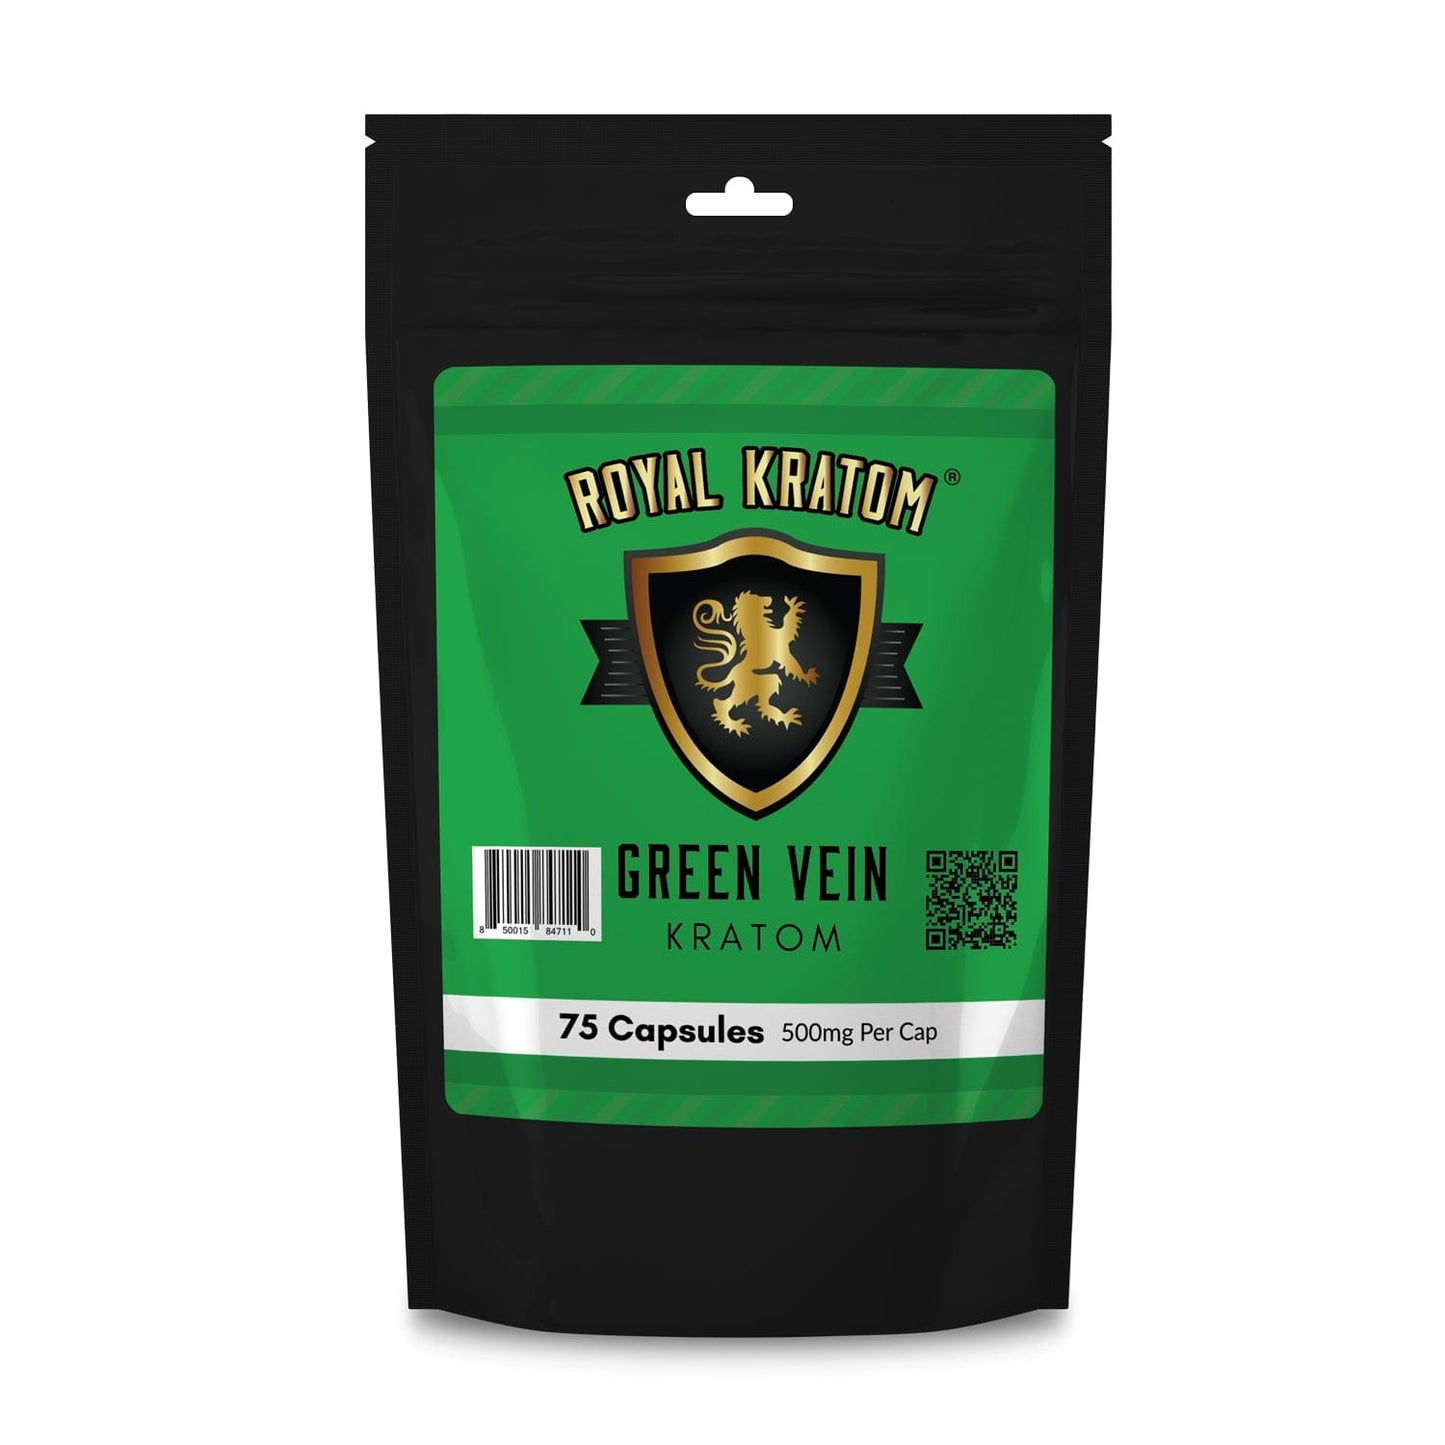 Royal Kratom green vein kratom capsules 75 count front packaging